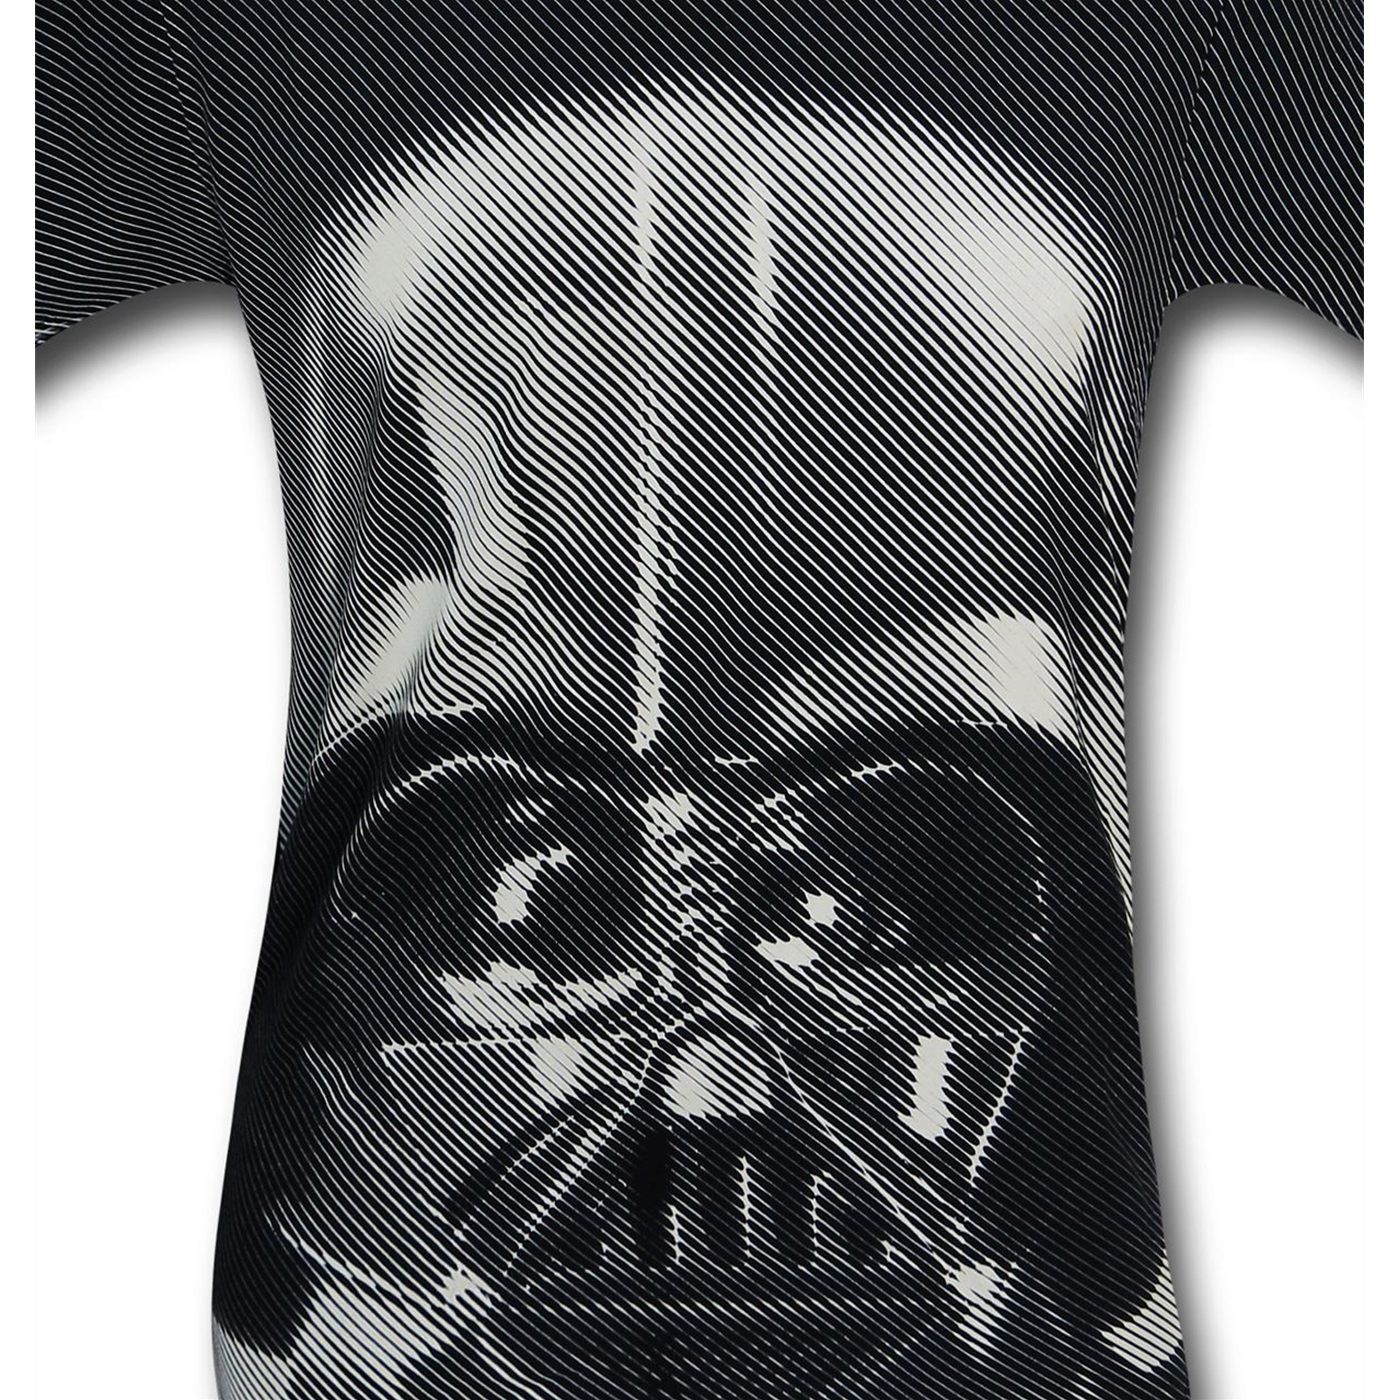 Star Wars Darth Vader All-Over Print Men's T-Shirt